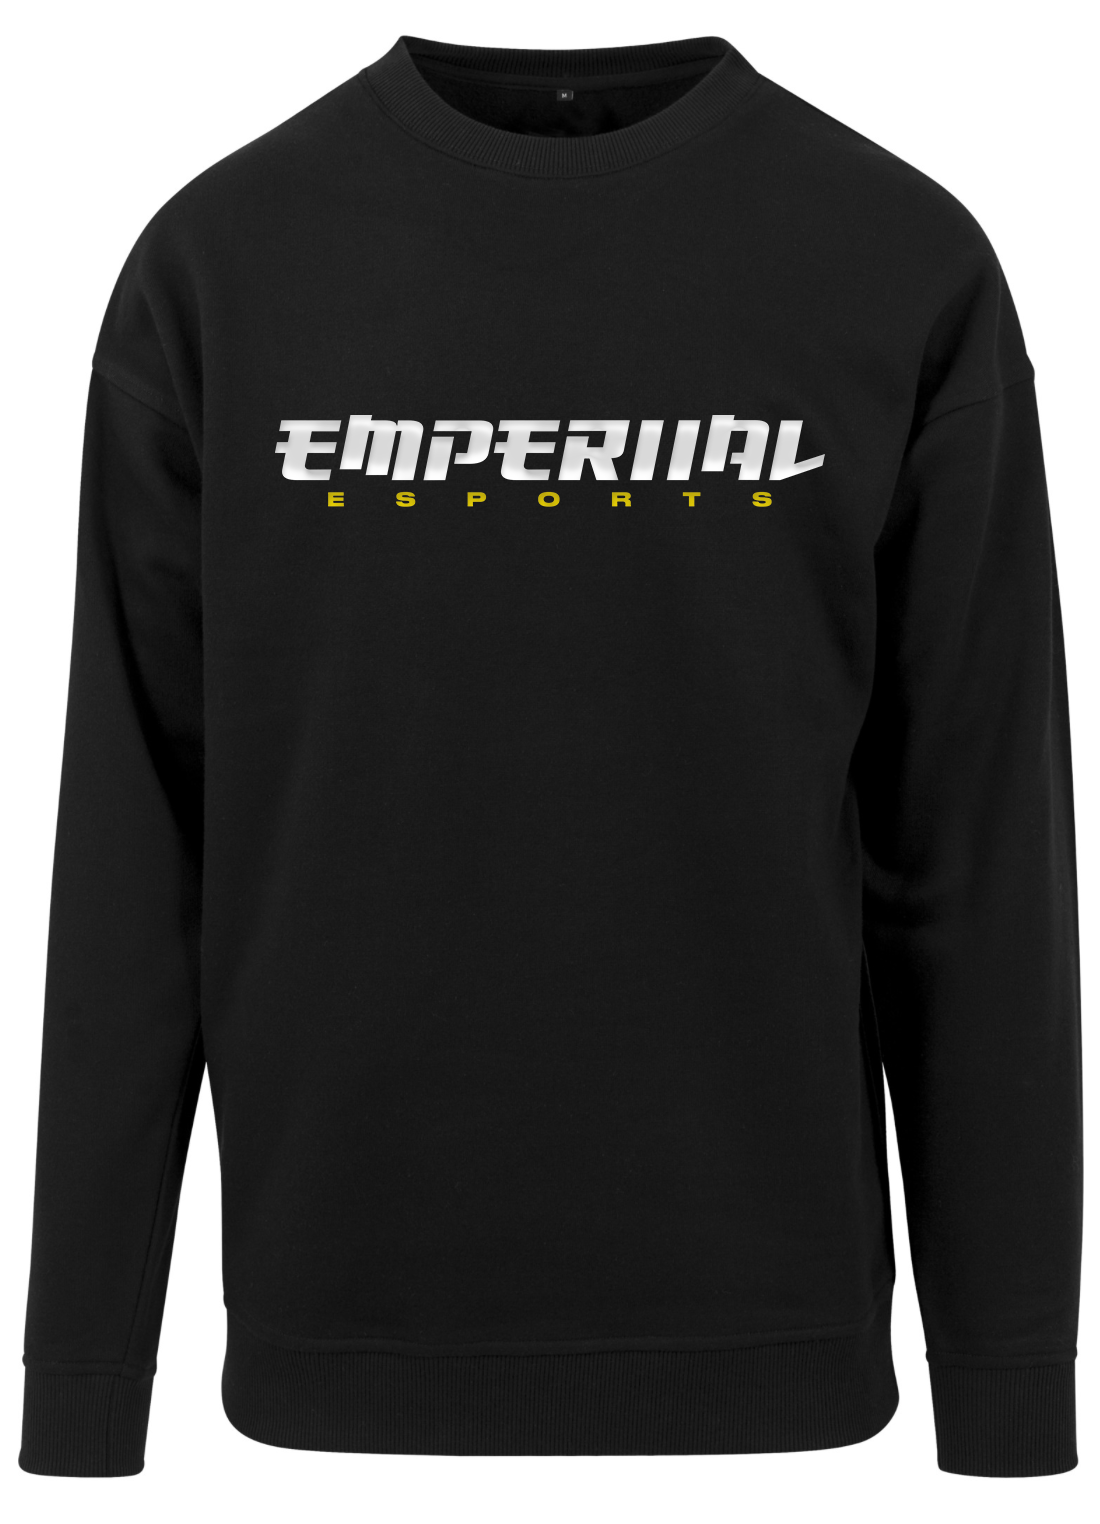 Emperiial - esports - Sweatshirt 